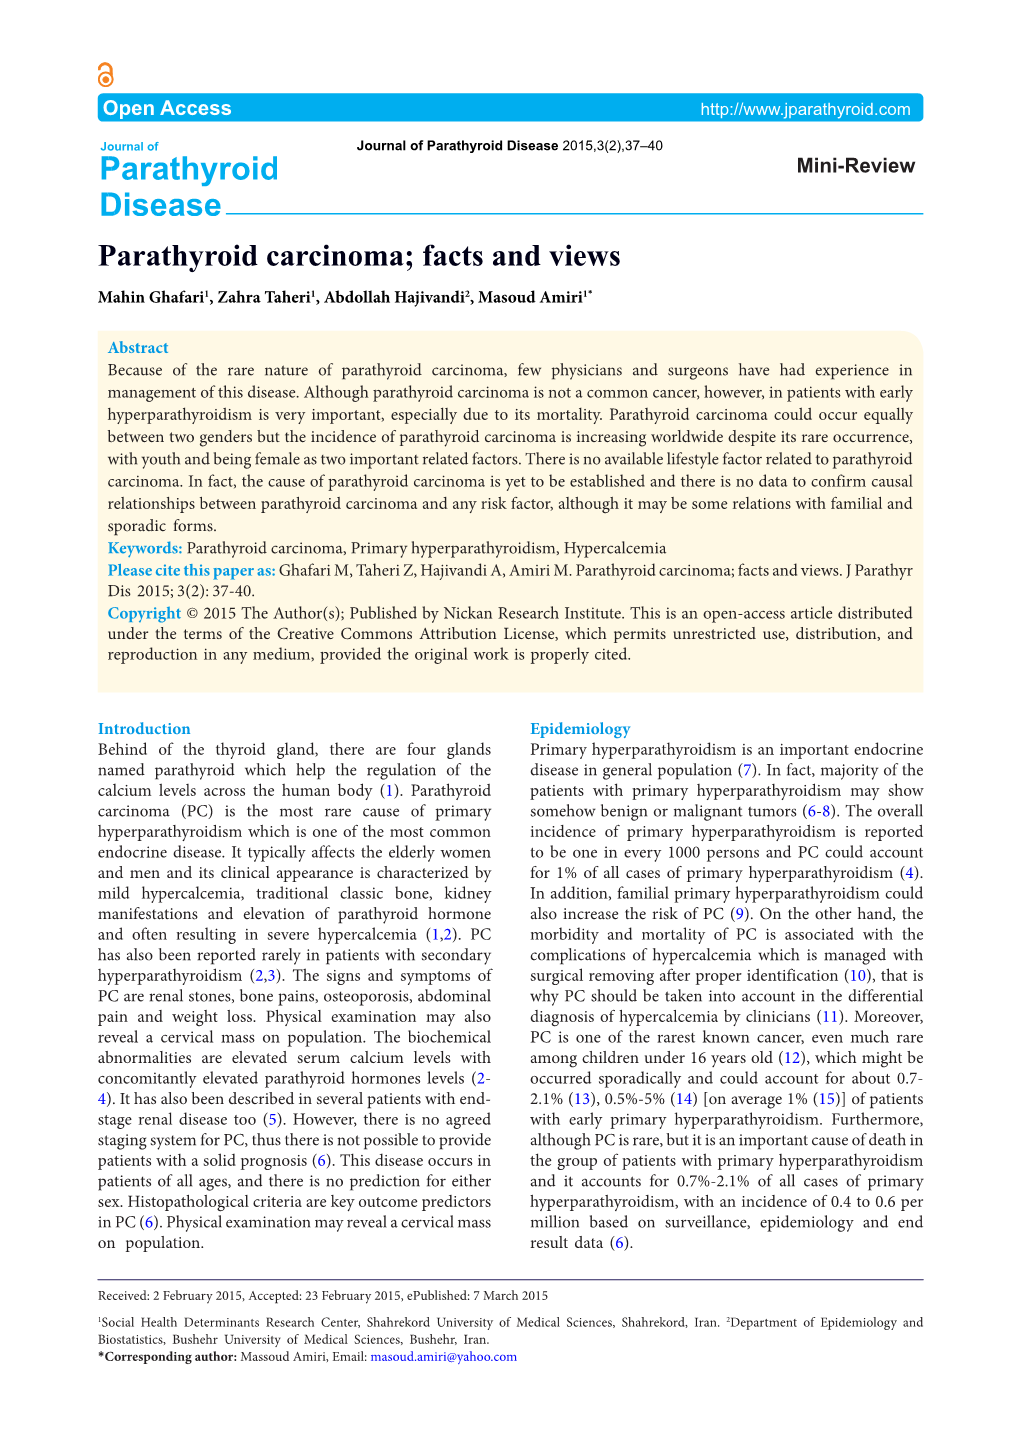 Parathyroid Carcinoma; Facts and Views Mahin Ghafari1, Zahra Taheri1, Abdollah Hajivandi2, Masoud Amiri1*